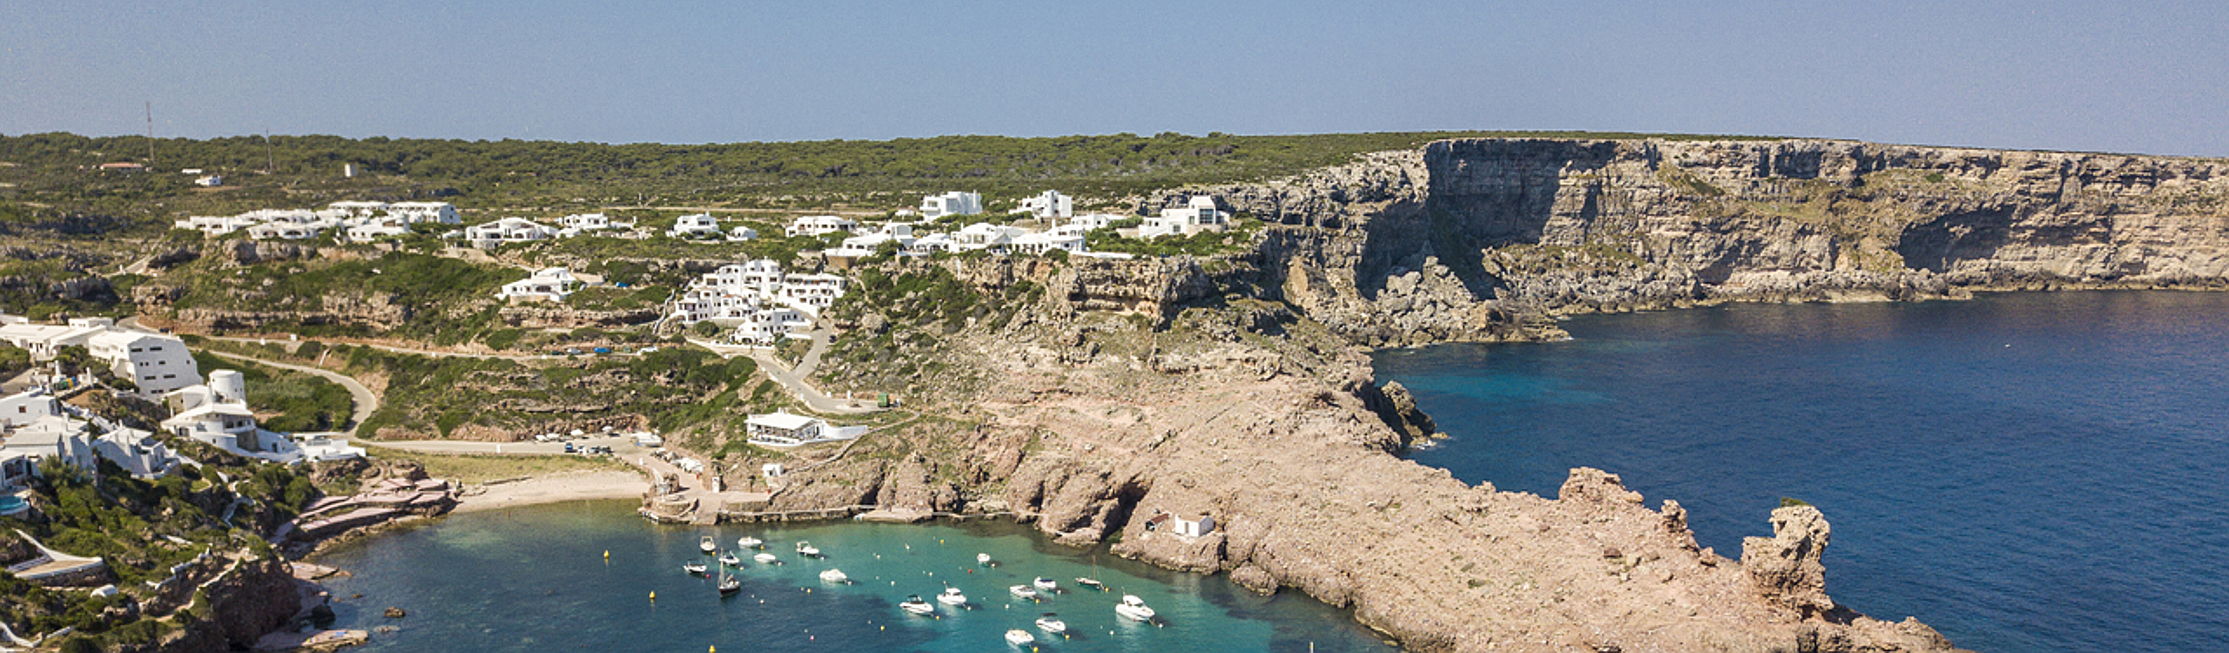  Mahón
- Engel & Völkers - Ihr Immobilienmakler auf Menorca